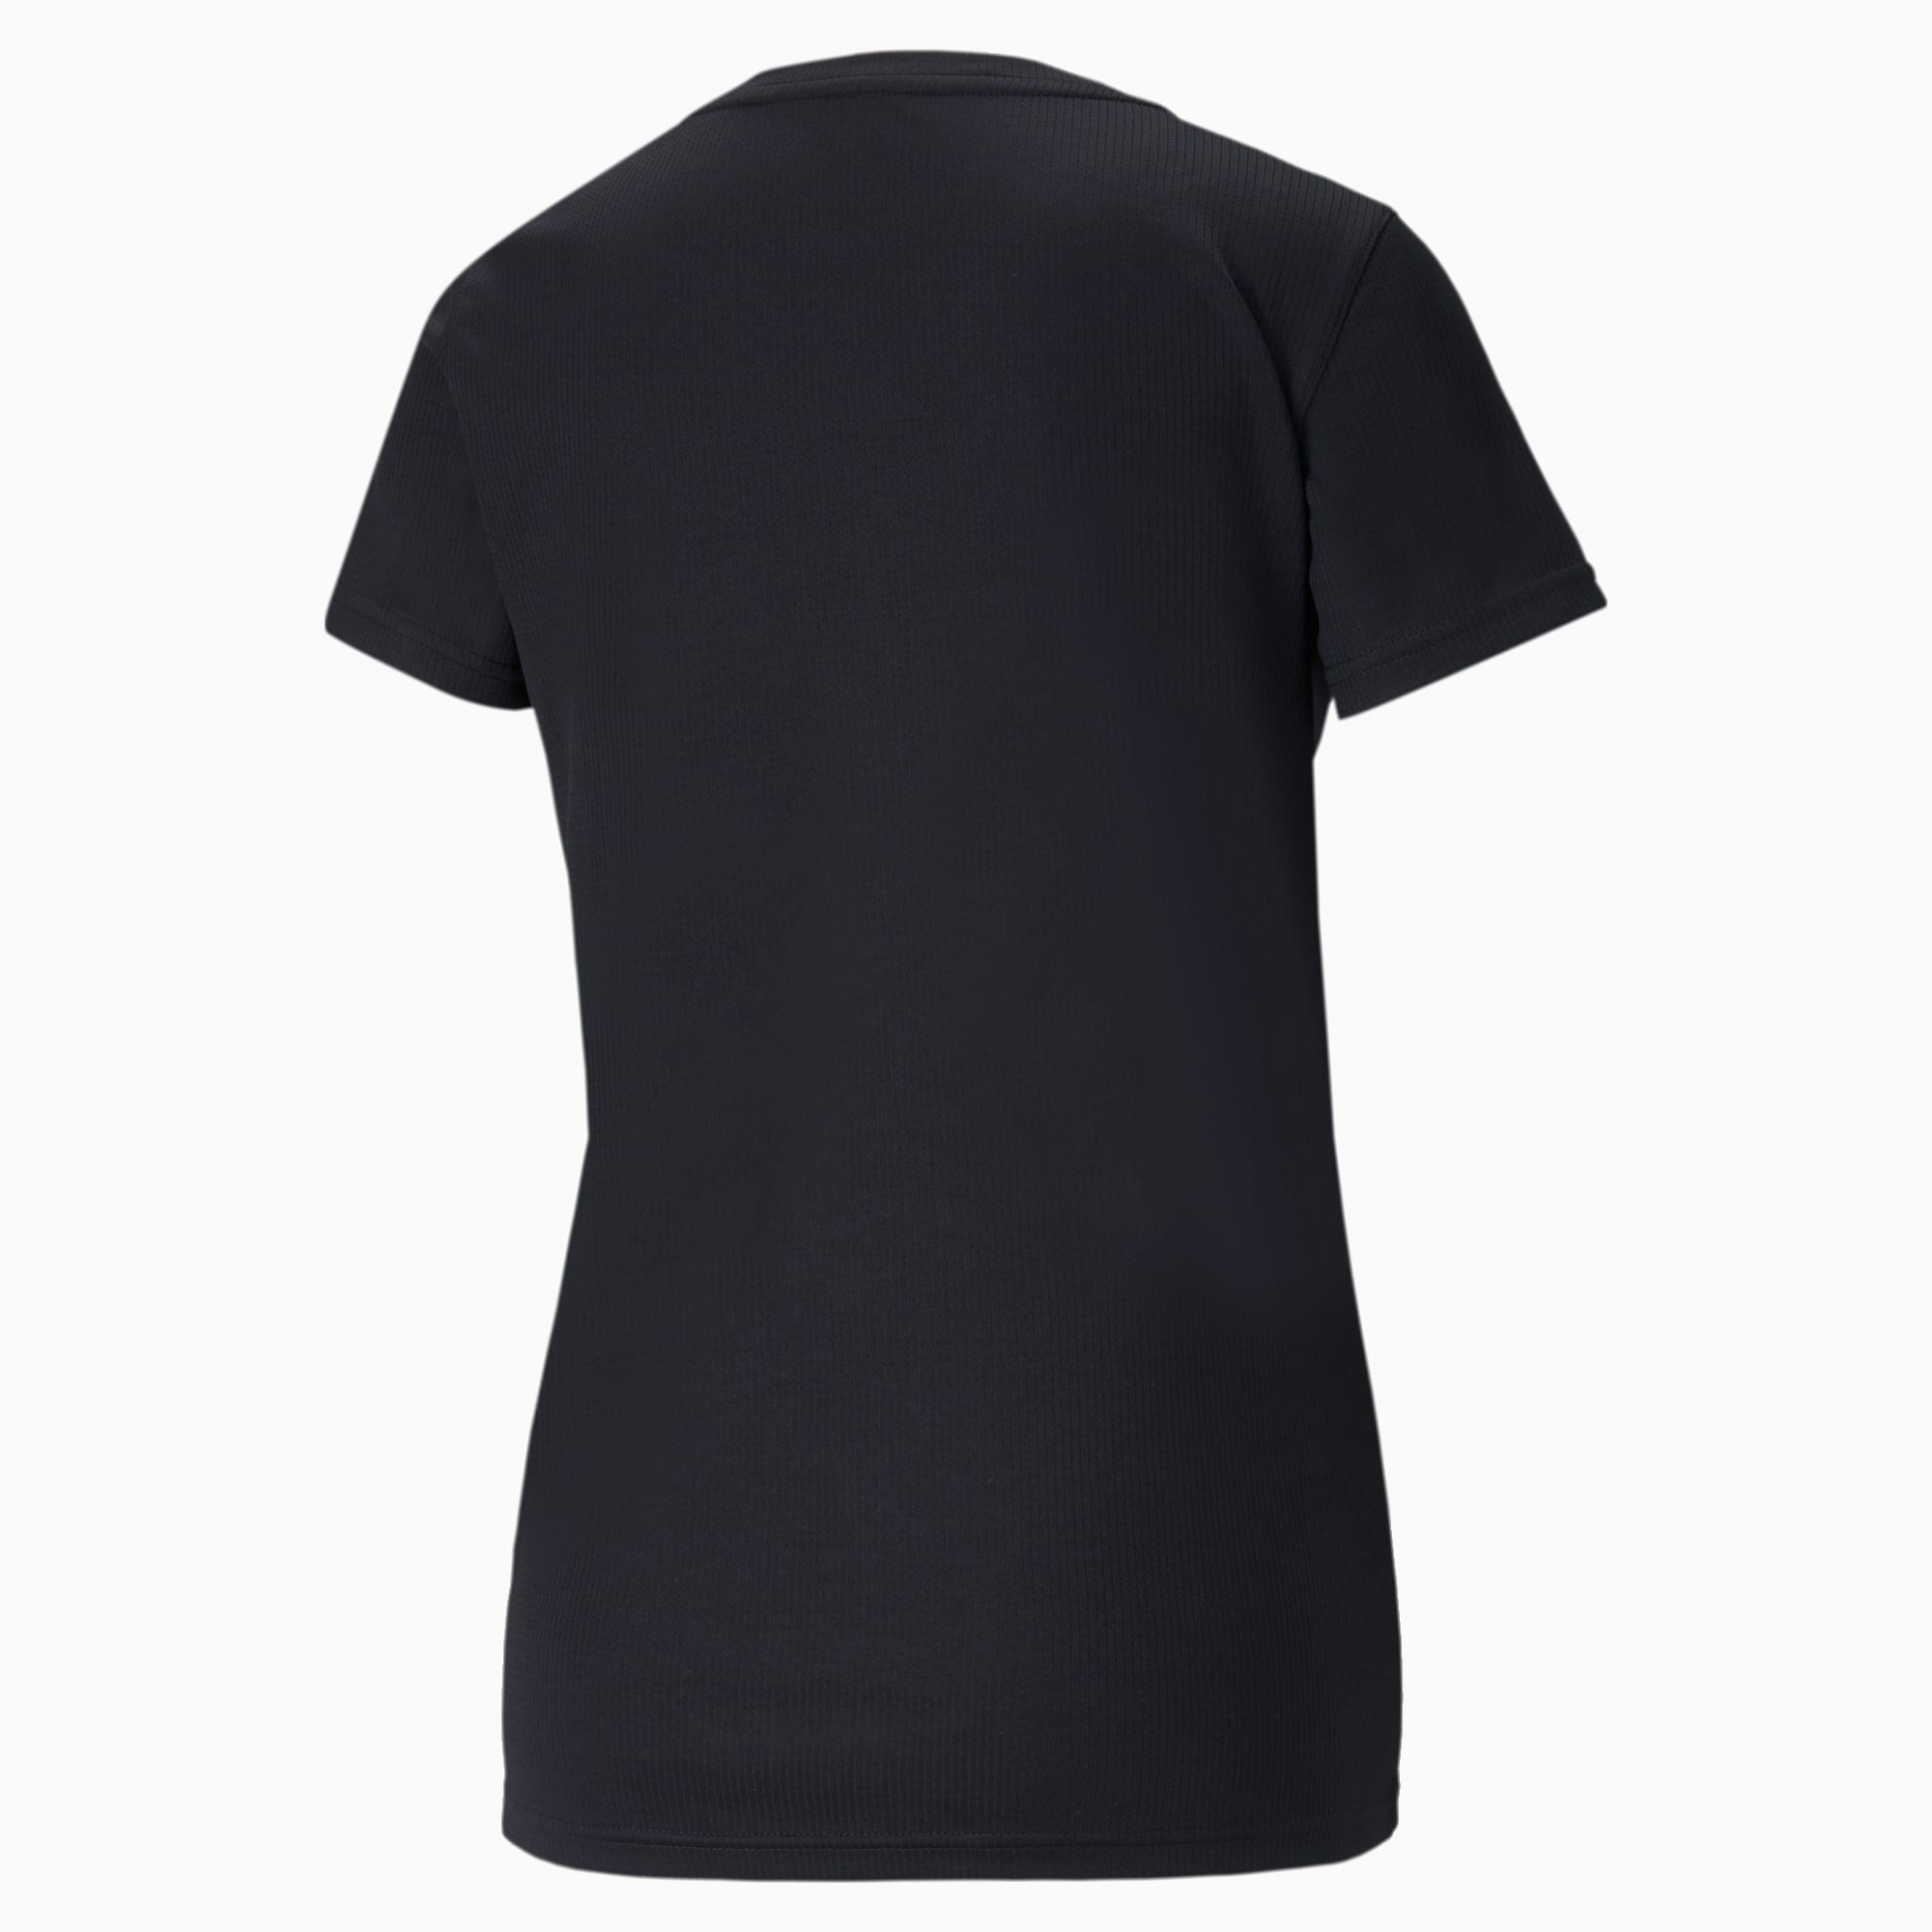 PUMA Performance Women's Training T-Shirt, Black, Size M, Clothing